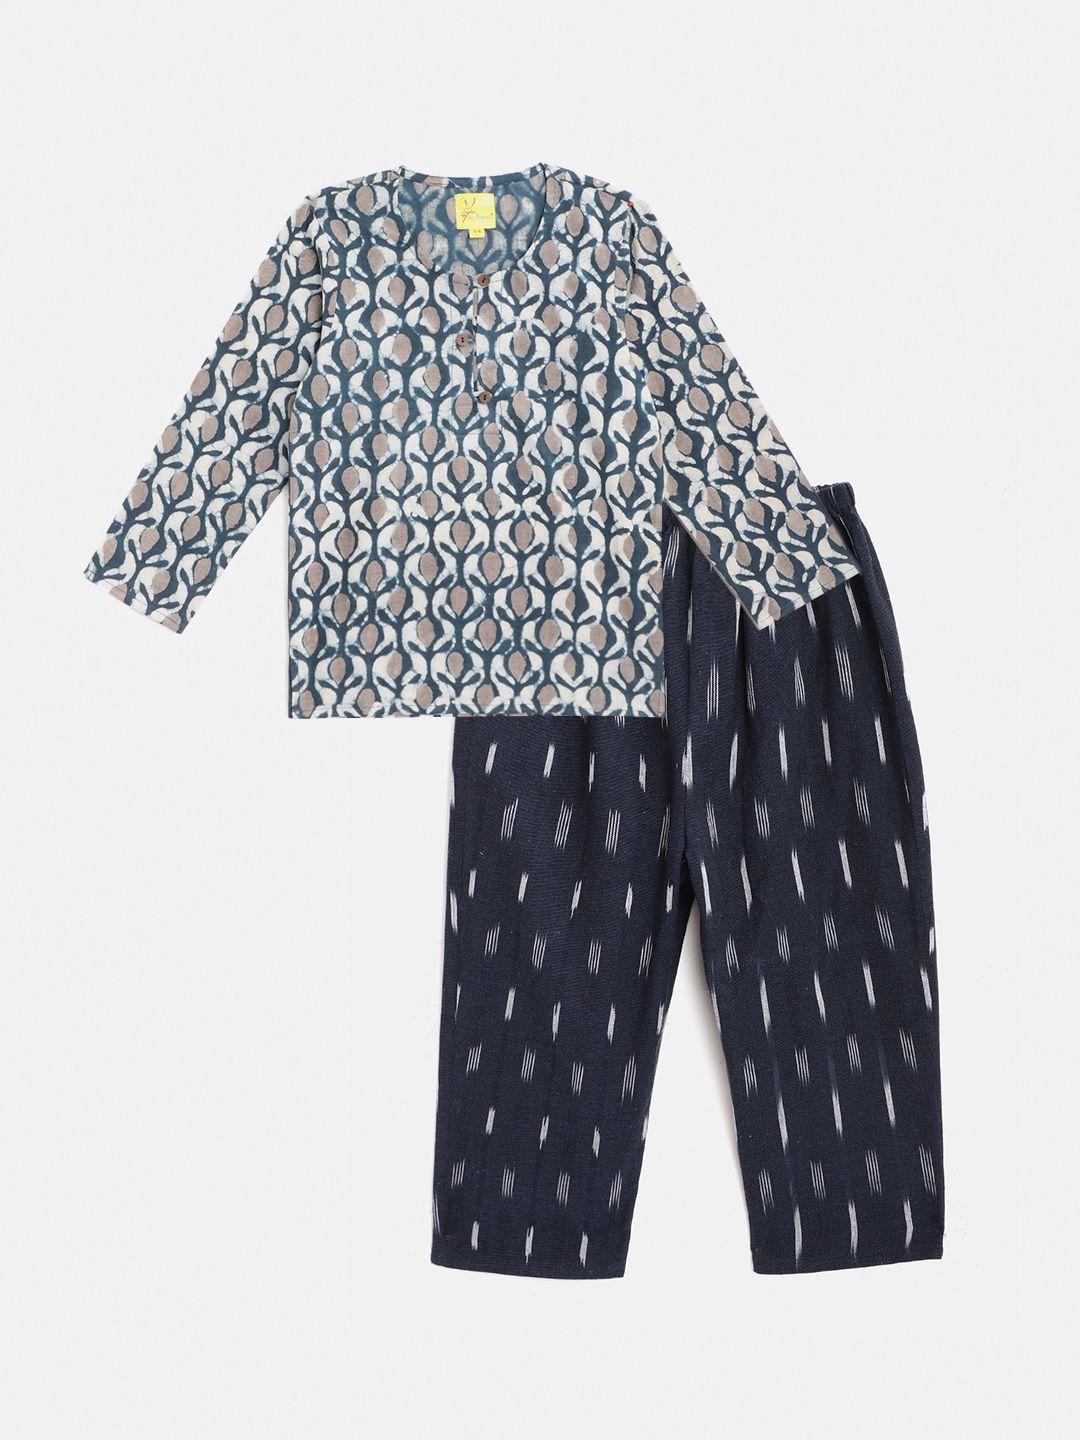 tiny bunnies unisex kids blue & grey printed top with pyjamas